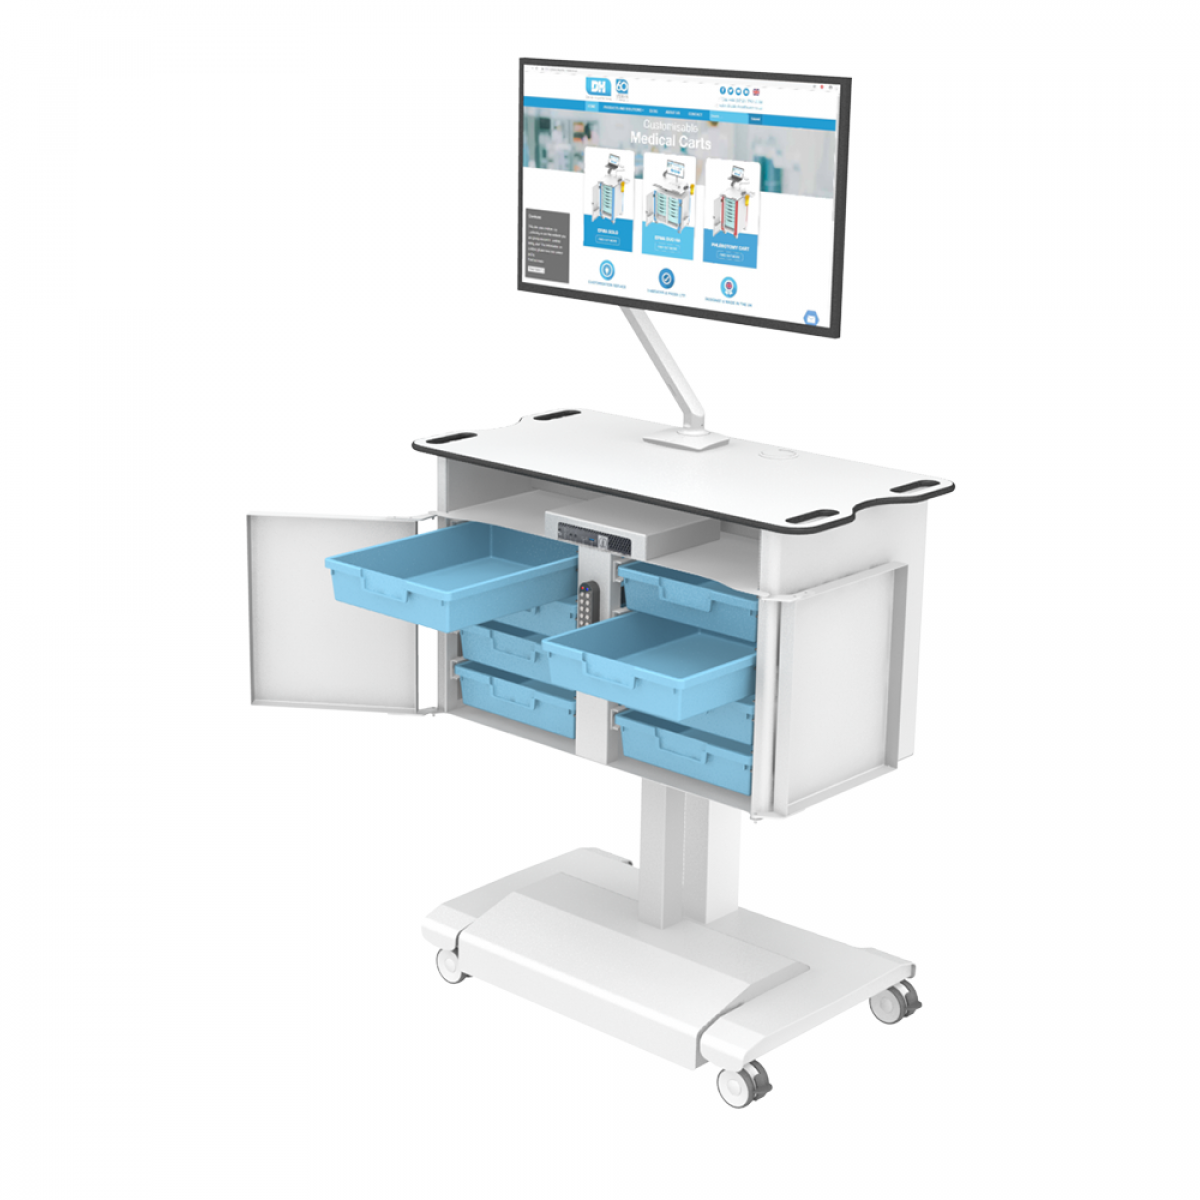 Dalen Healthcare's MediCab Duo - equipment trolley